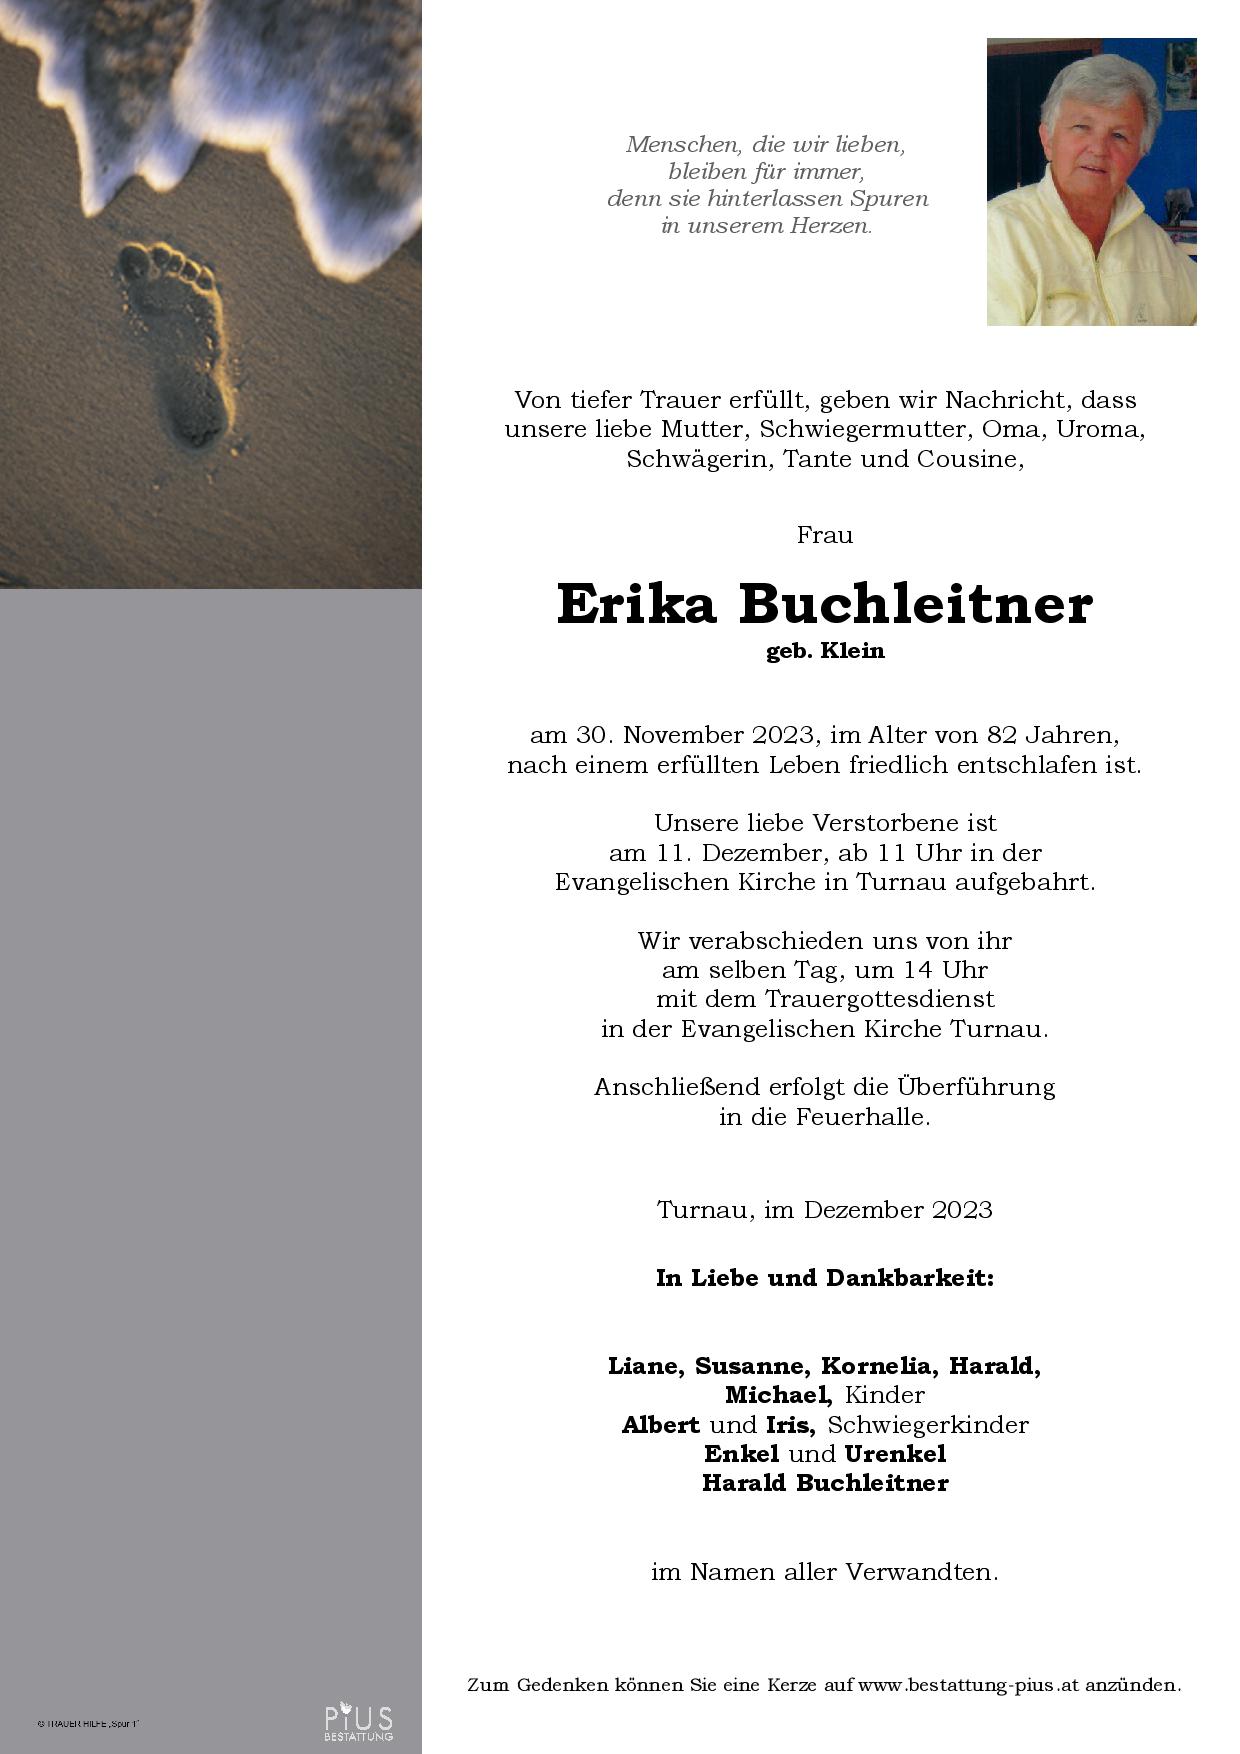 Erika Buchleitner